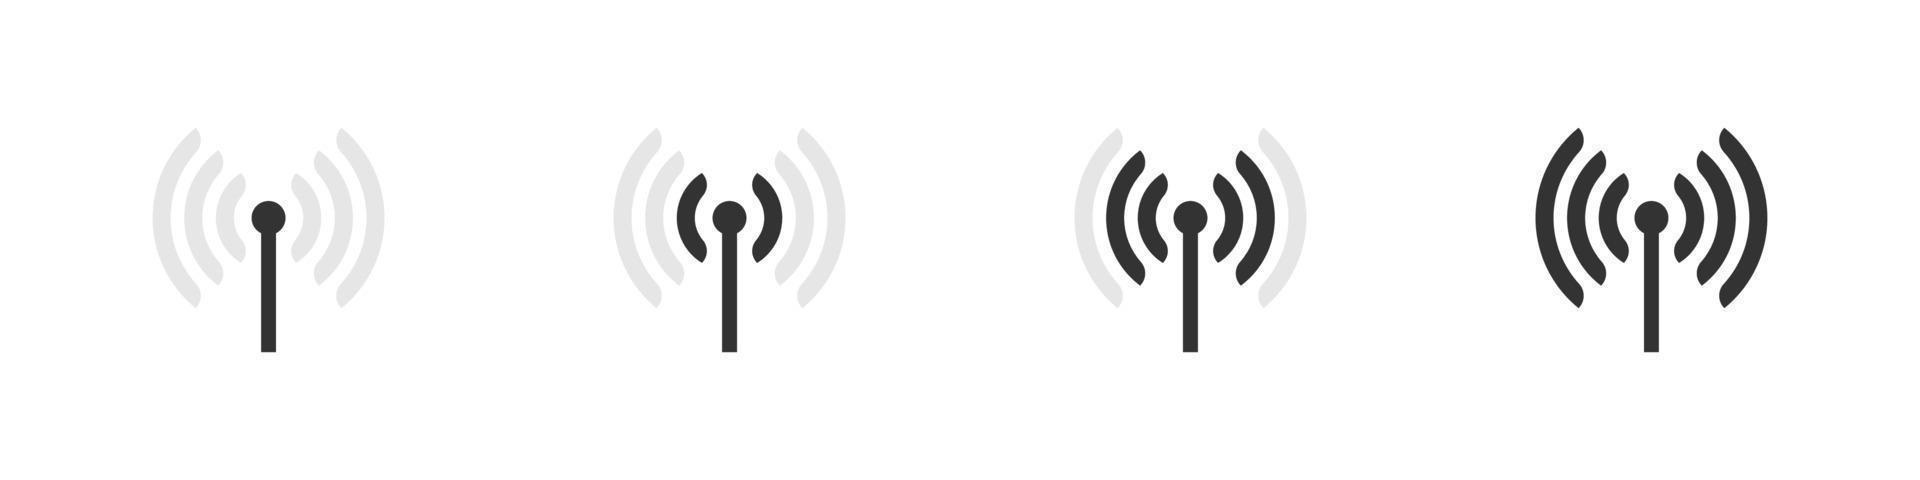 antena wifi. concepto de iconos wifi. signo de internet inalámbrico aislado sobre fondo blanco. ilustración vectorial vector